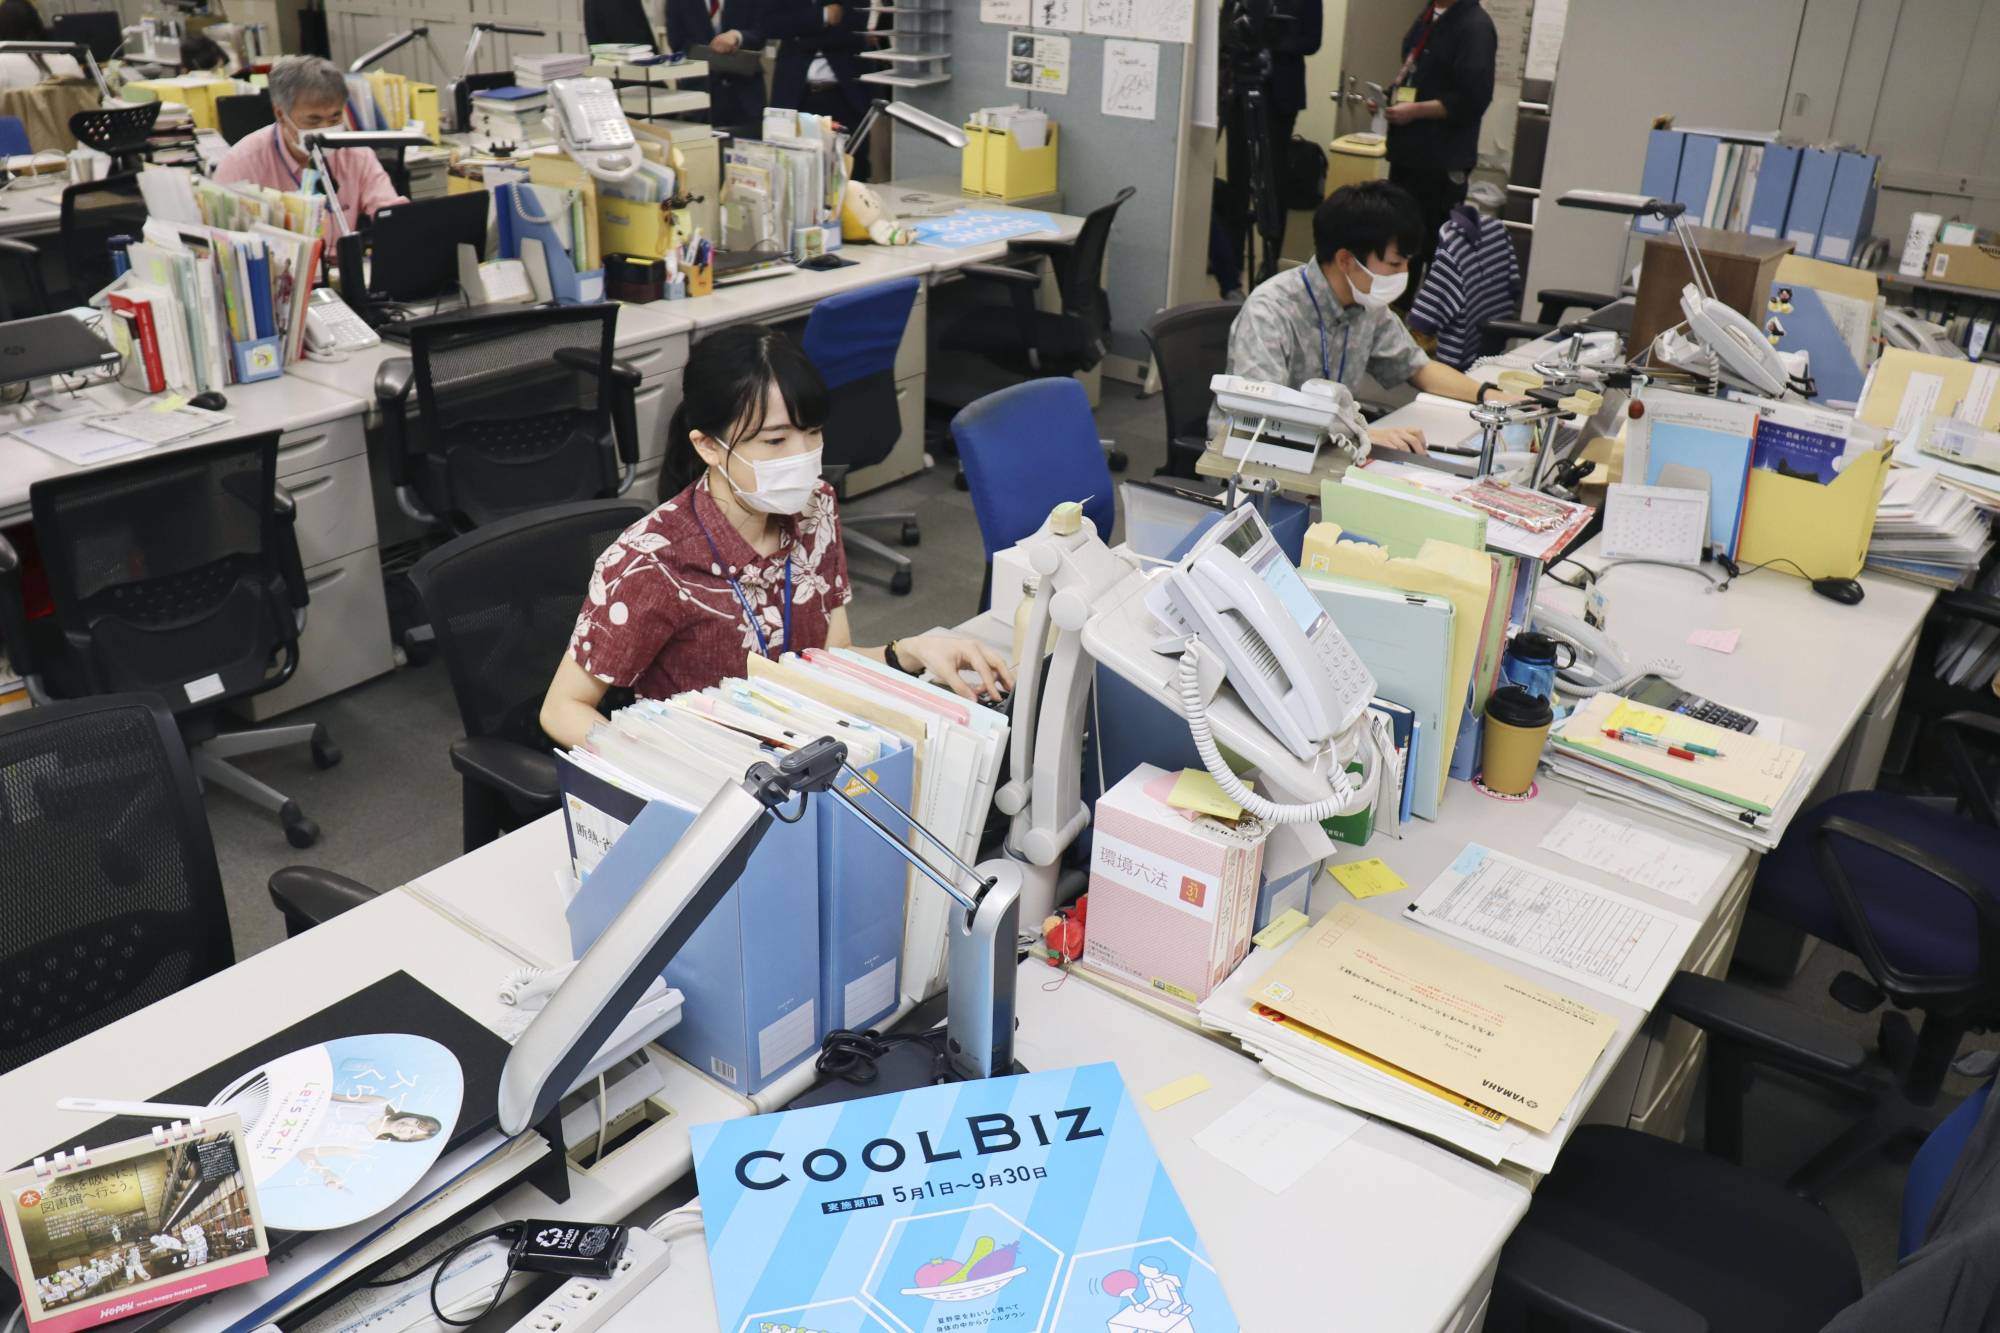 Cool Biz' energy-saving campaign begins in Japan | The Japan Times